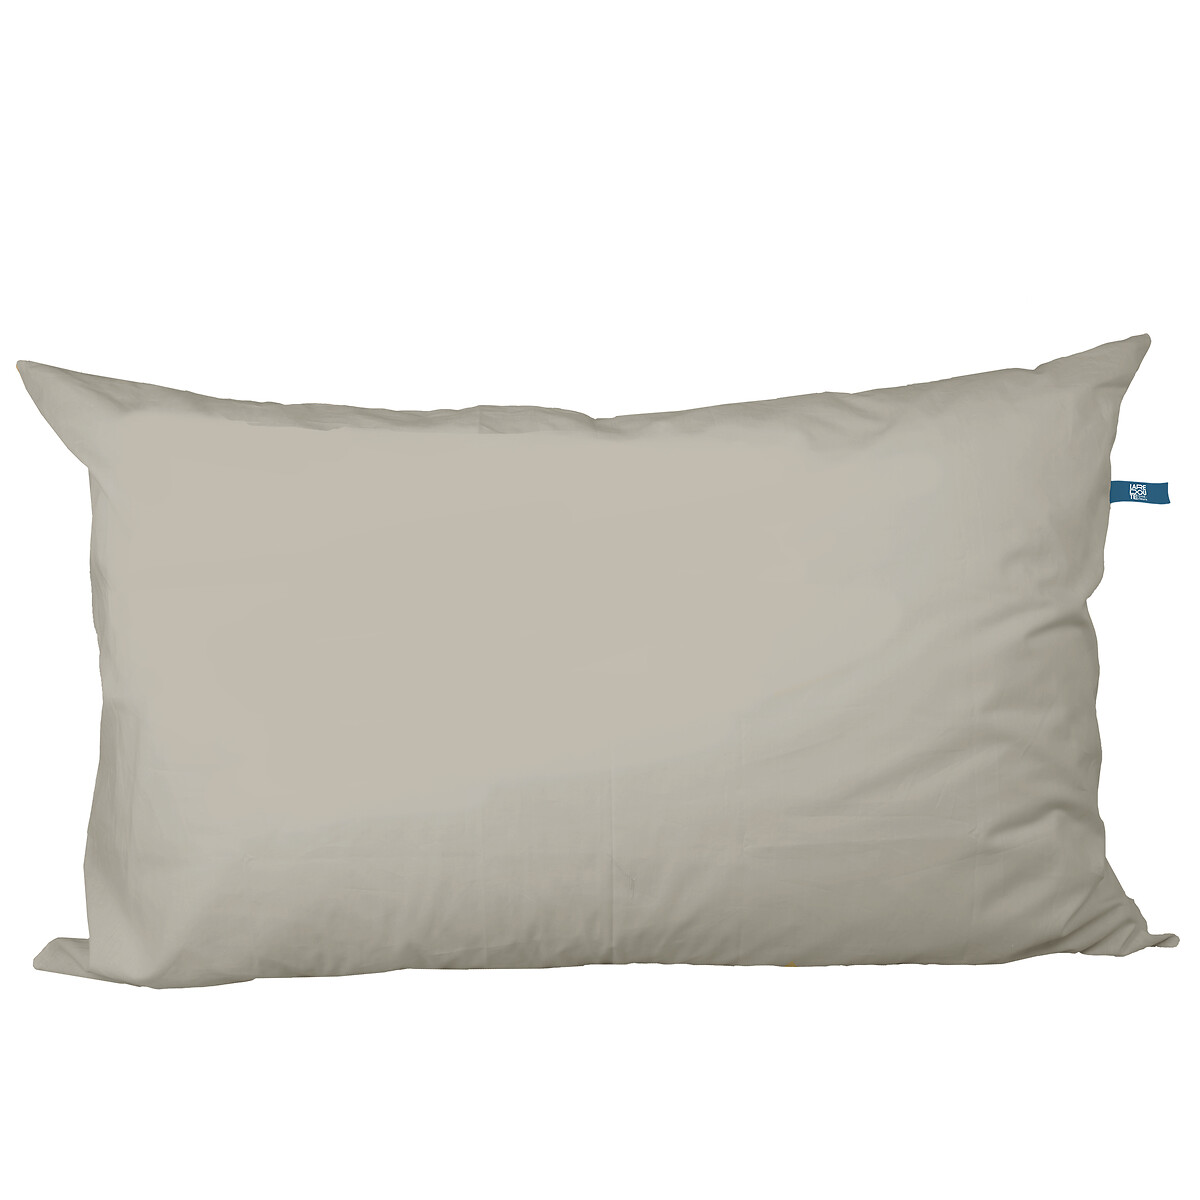 Подушка среднего размера из синтетики Big pillow  65 x 100 см бежевый LaRedoute - фото 1